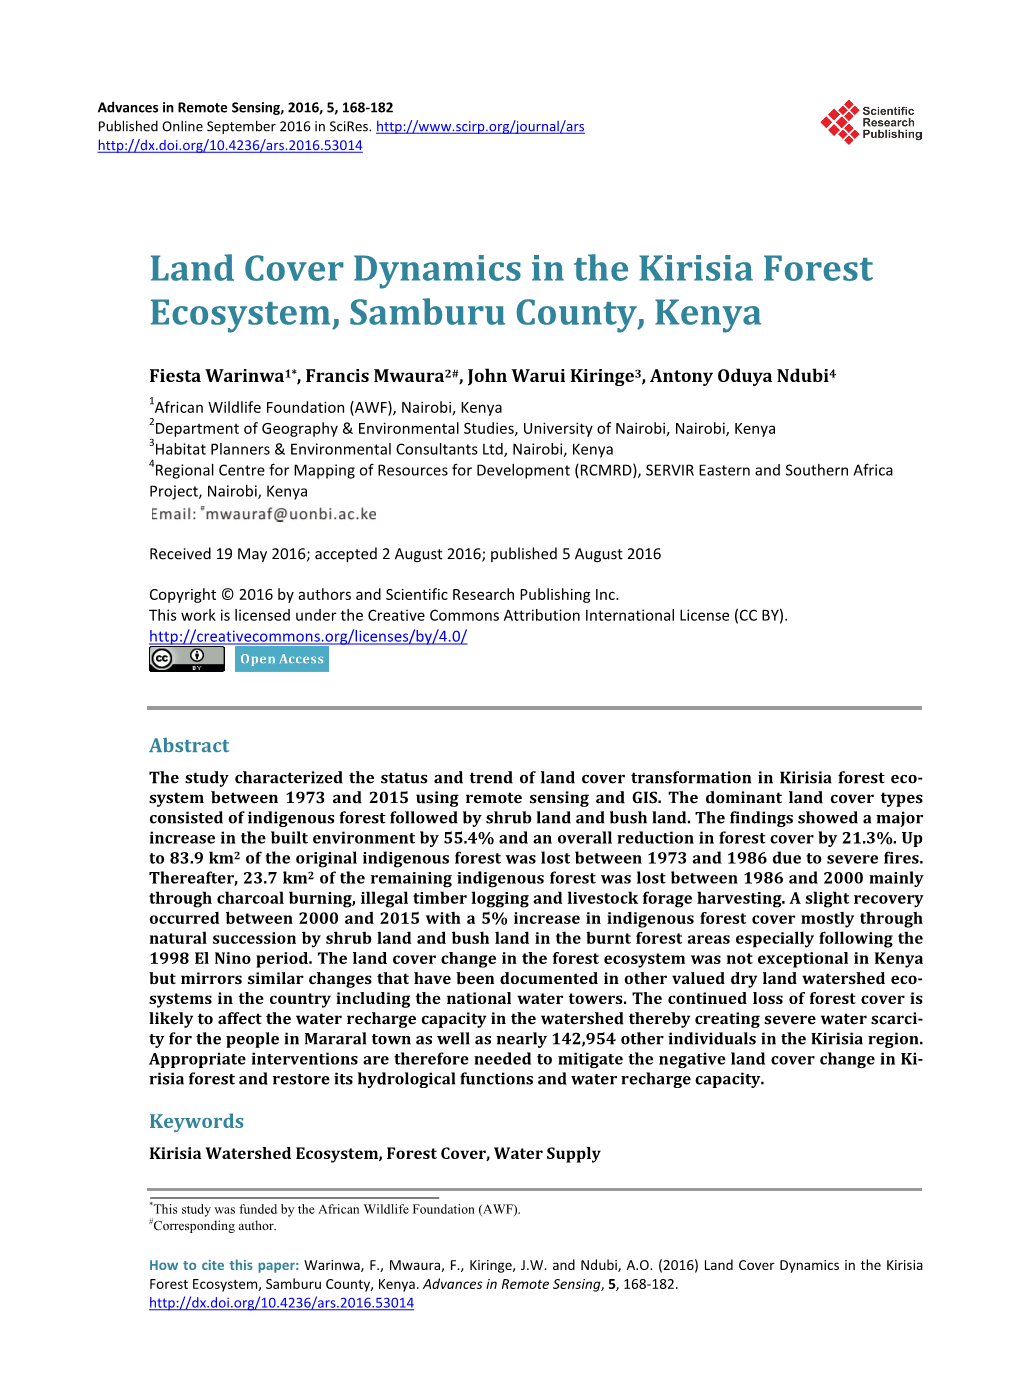 Land Cover Dynamics in the Kirisia Forest Ecosystem, Samburu County, Kenya